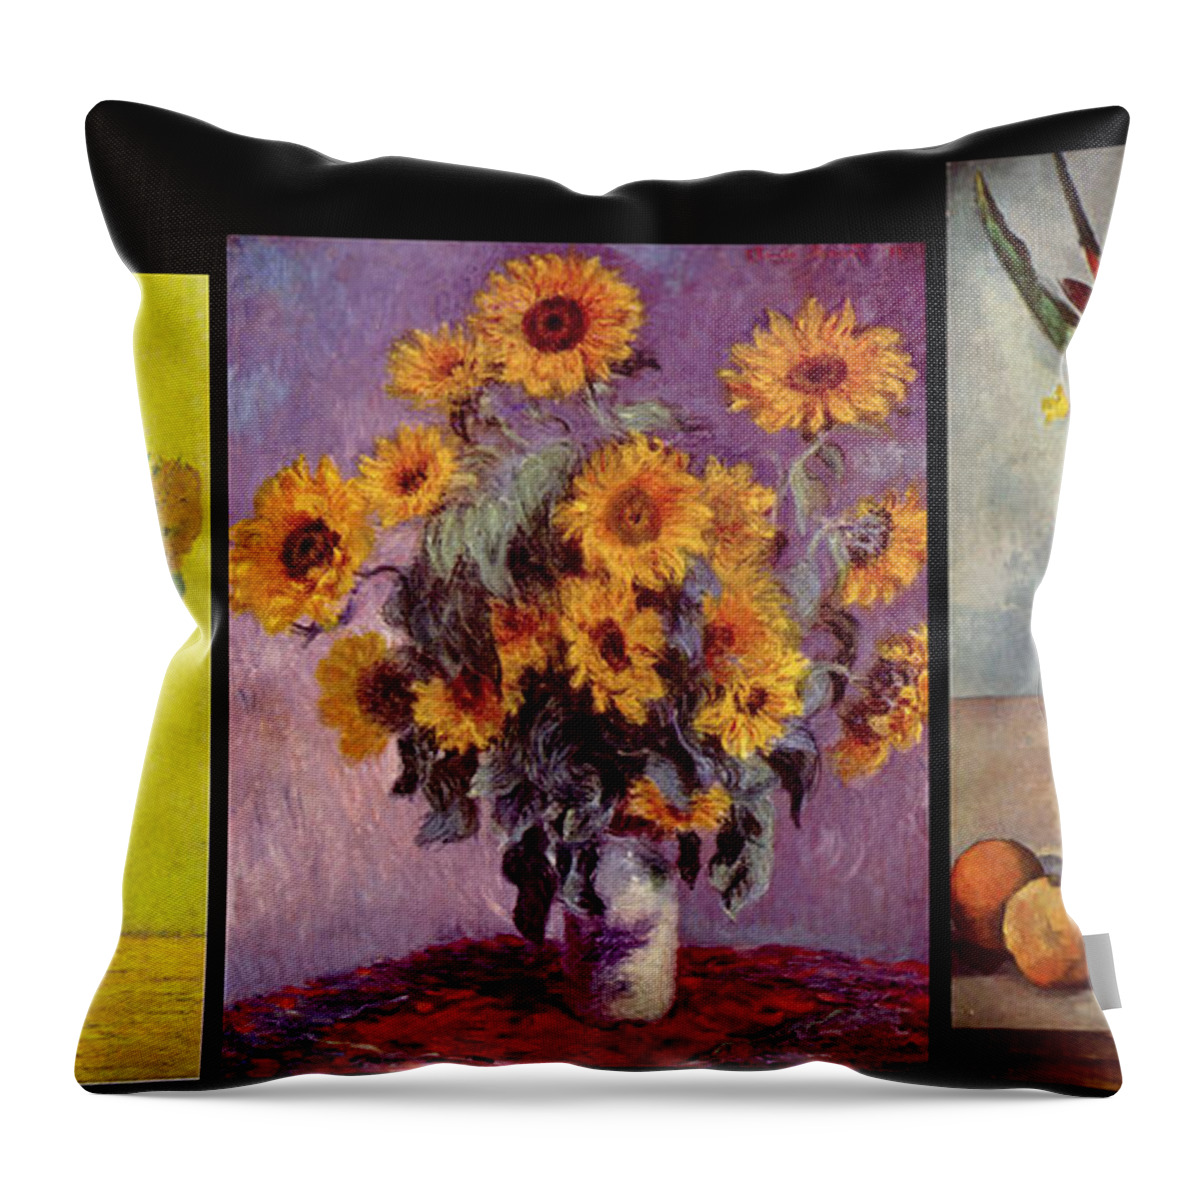 Modern Throw Pillow featuring the digital art Three Vases van Gogh - Monet - Cezanne by David Bridburg